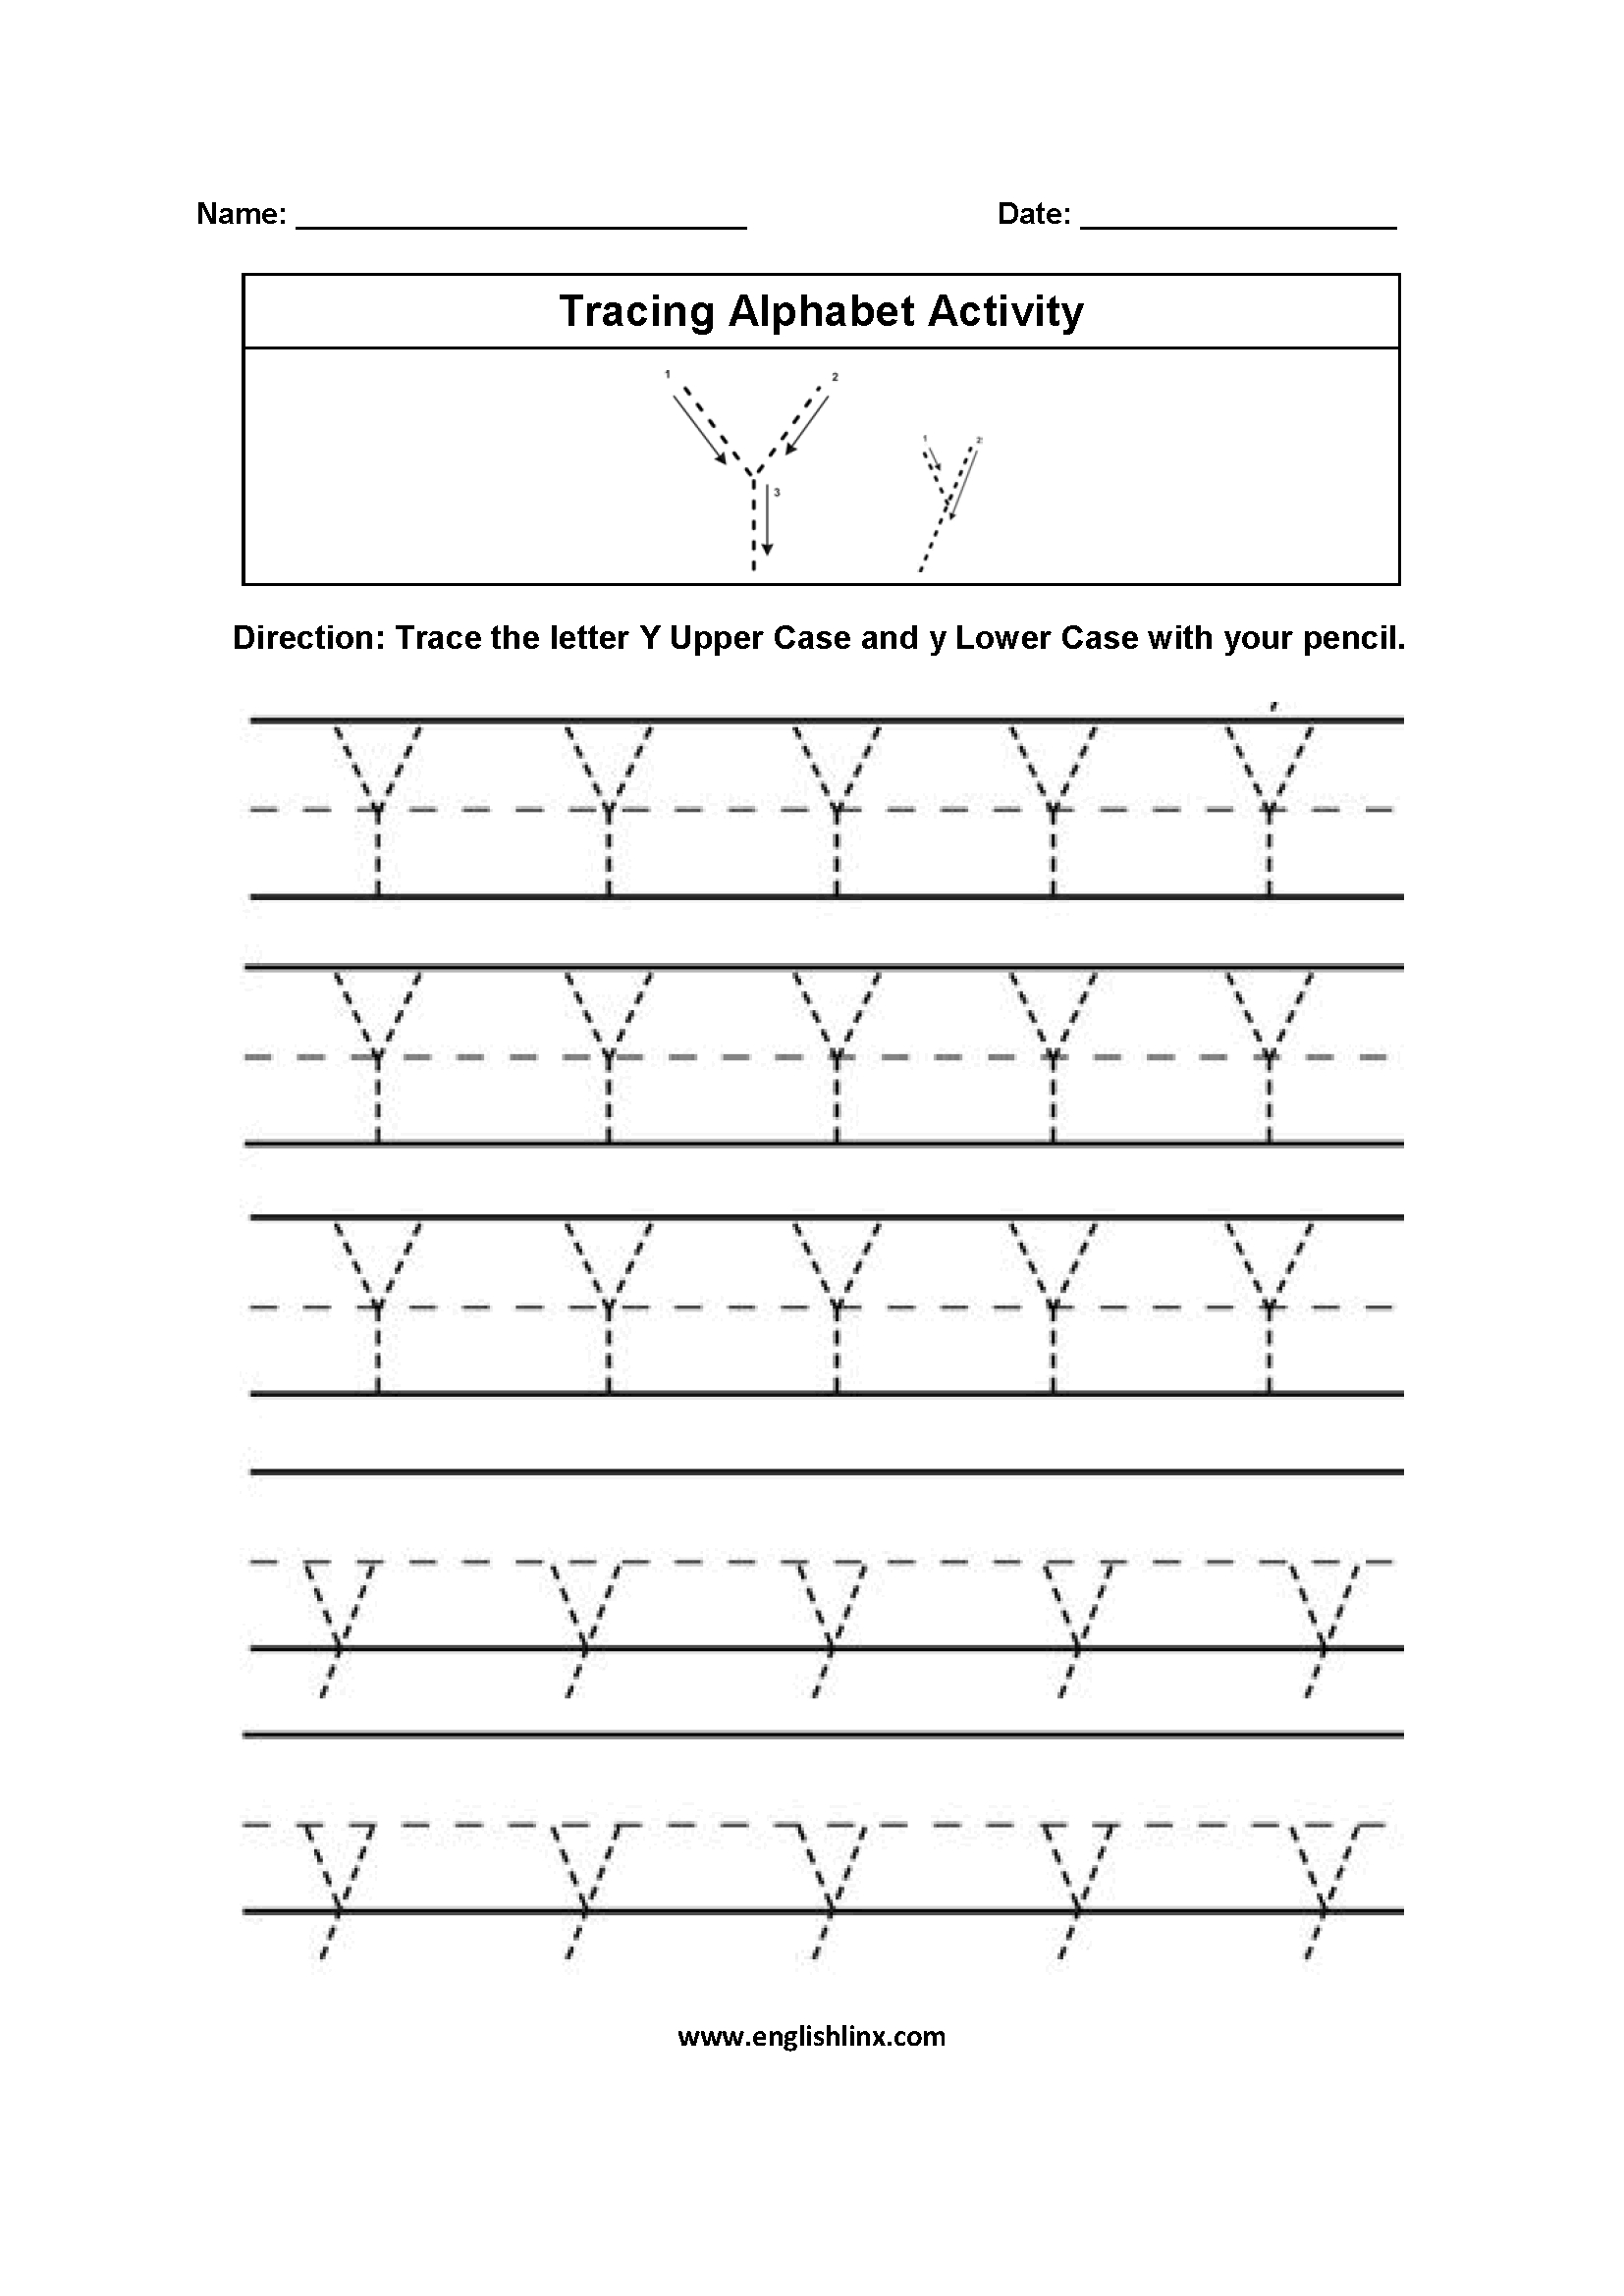 Kids Worksheets Kindergarten To Z Writing | Chesterudell inside Grade 1 Alphabet Tracing Worksheets